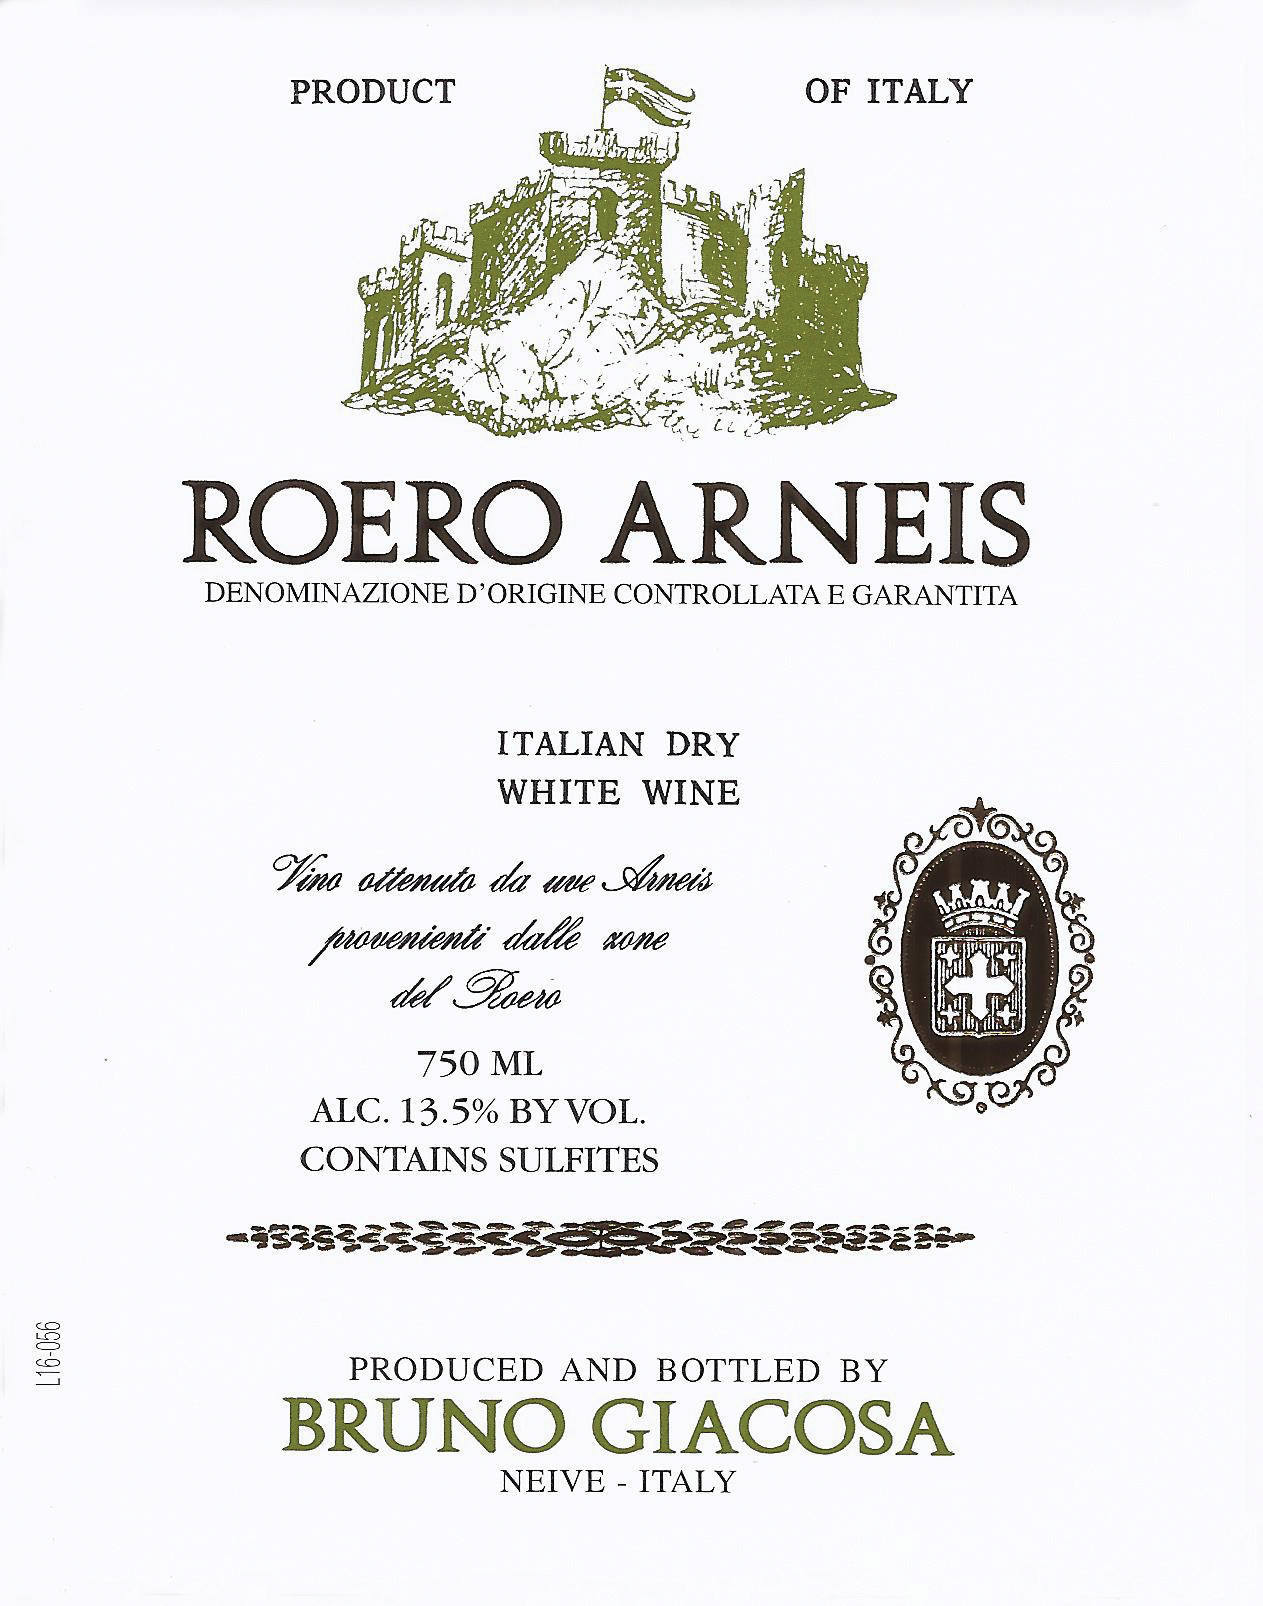 Bruno Giacosa - Roero Arneis label